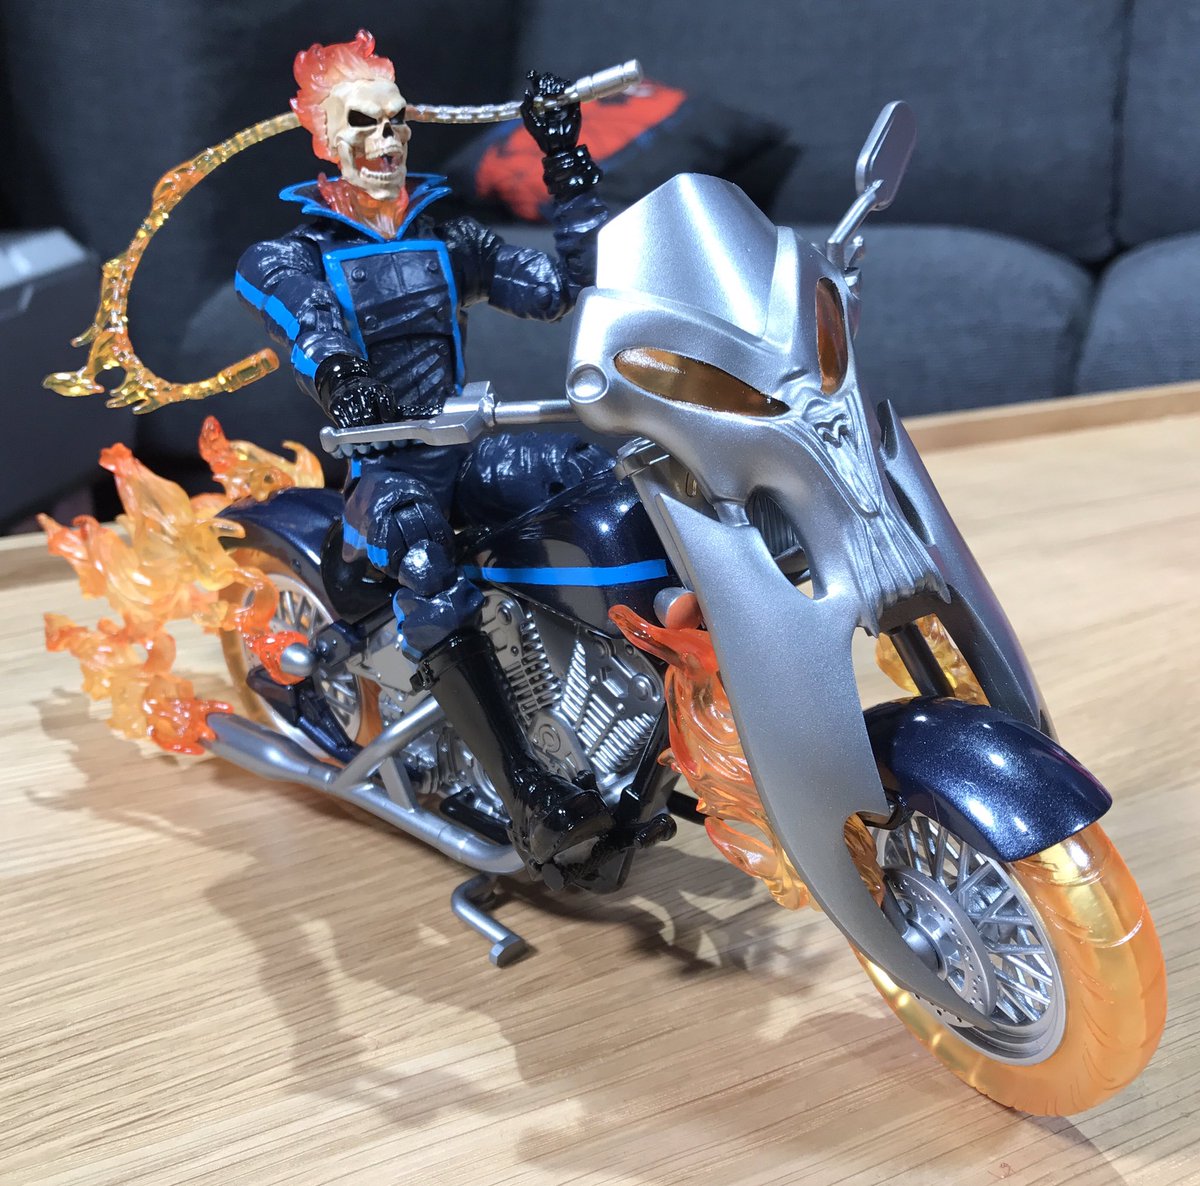 ghost rider marvel vengence